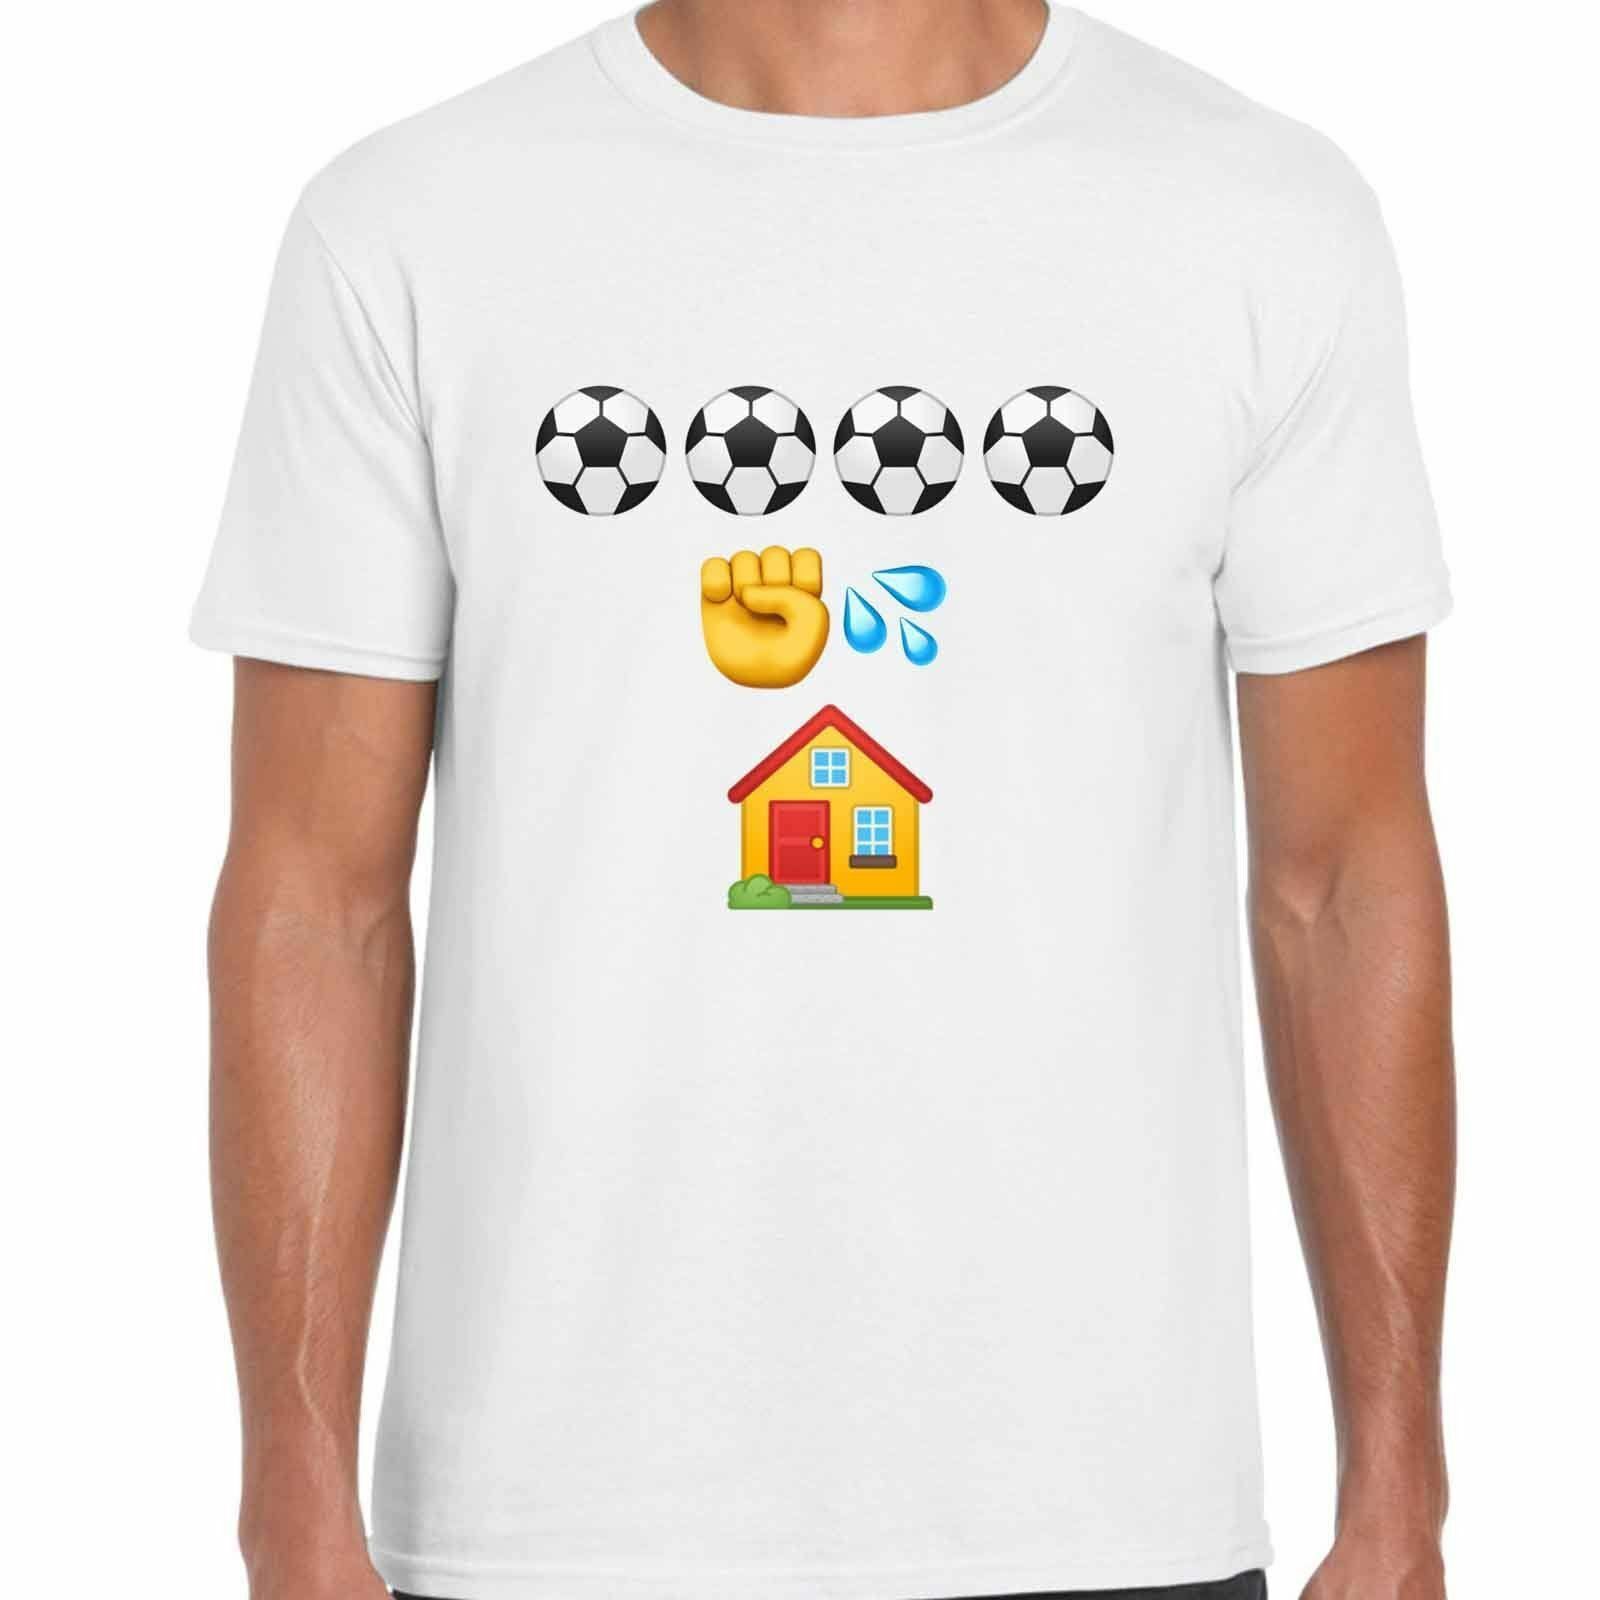 Footballs Coming Home Emoji T-Shirt